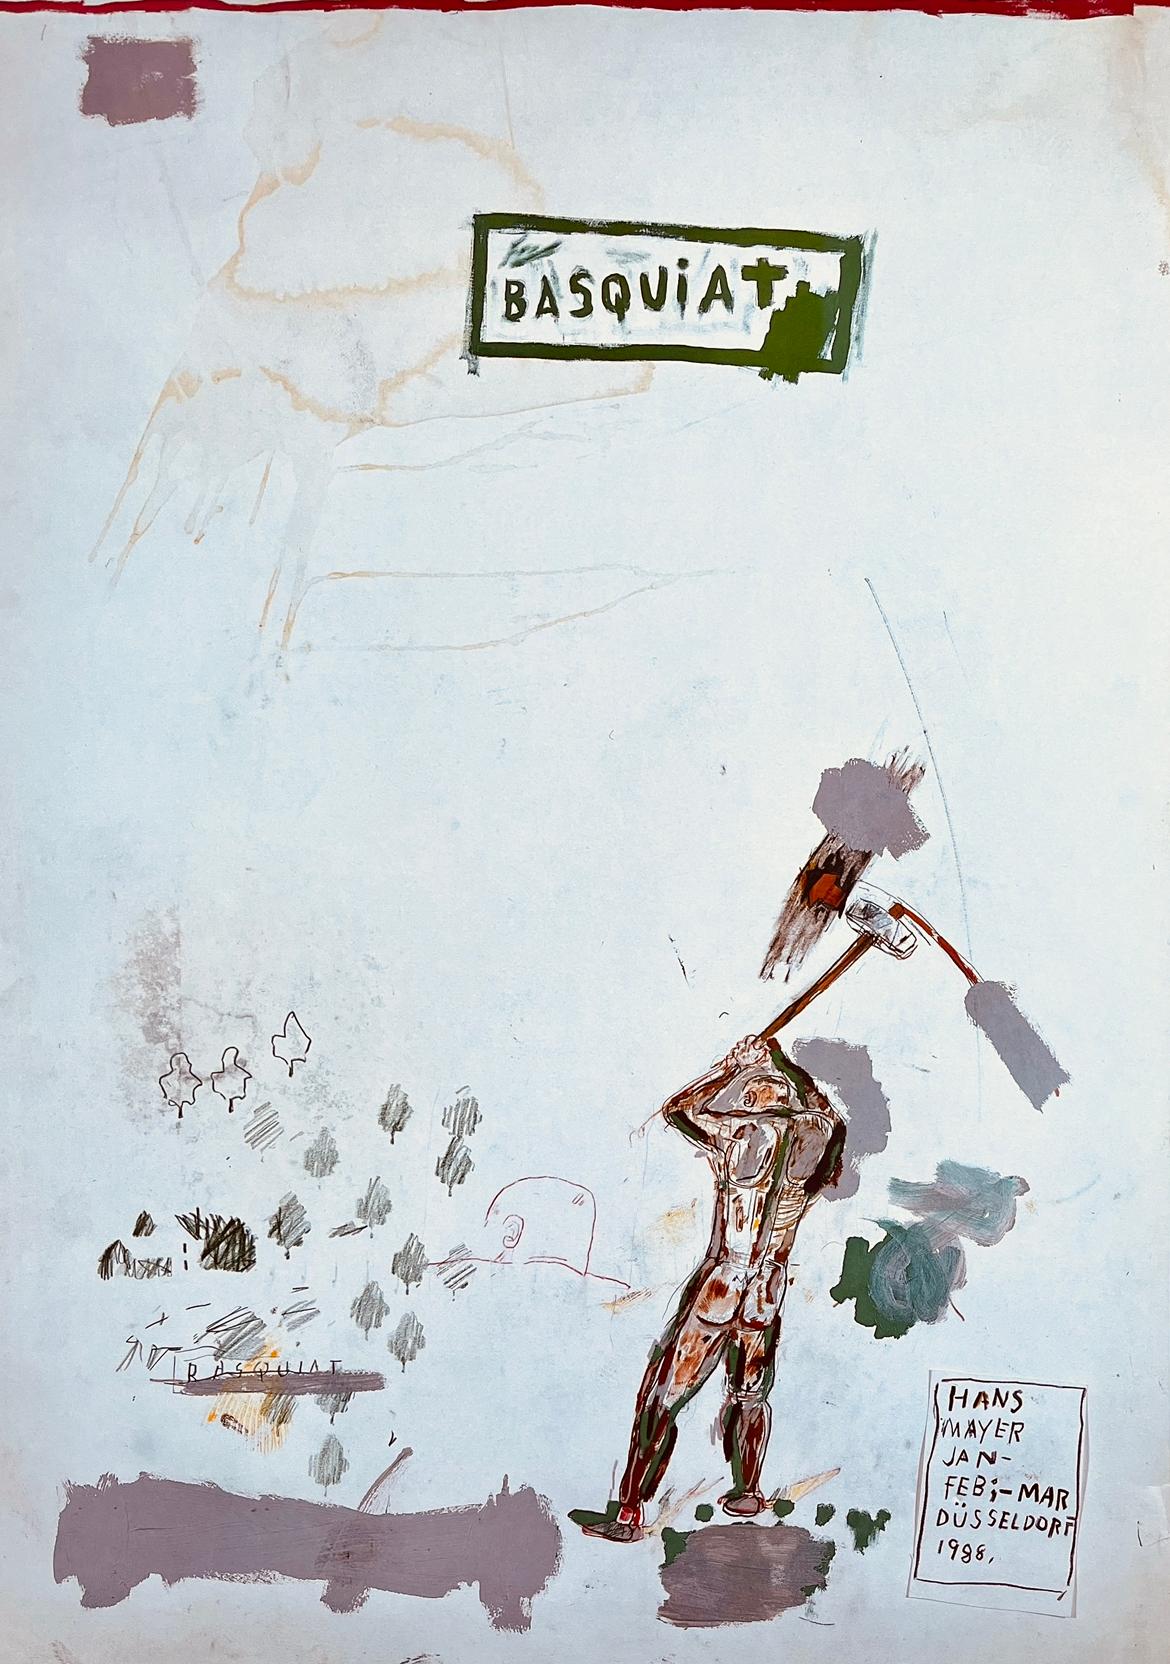 Jean-Michel Basquiat Abstract Print – Basquiat Galerie Hans Mayer 1988 (1980er Basquiat-Ausstellungsplakat)